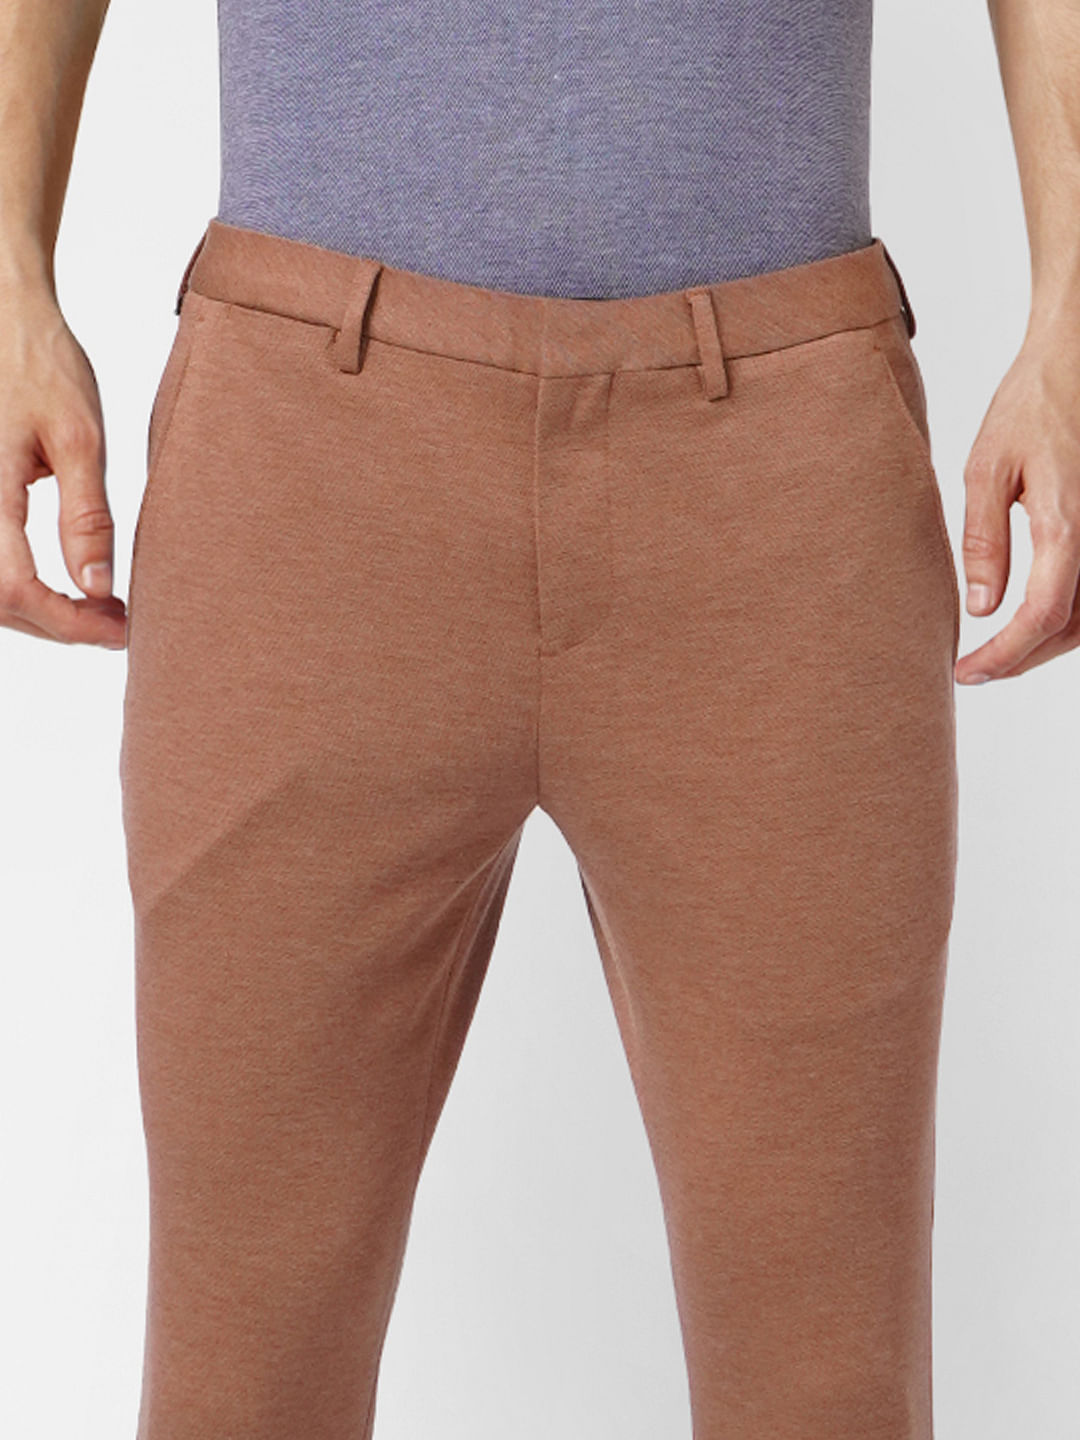 Buy American Noti Men Brown Solid Slim fit Regular trousers Online at Low  Prices in India  Paytmmallcom